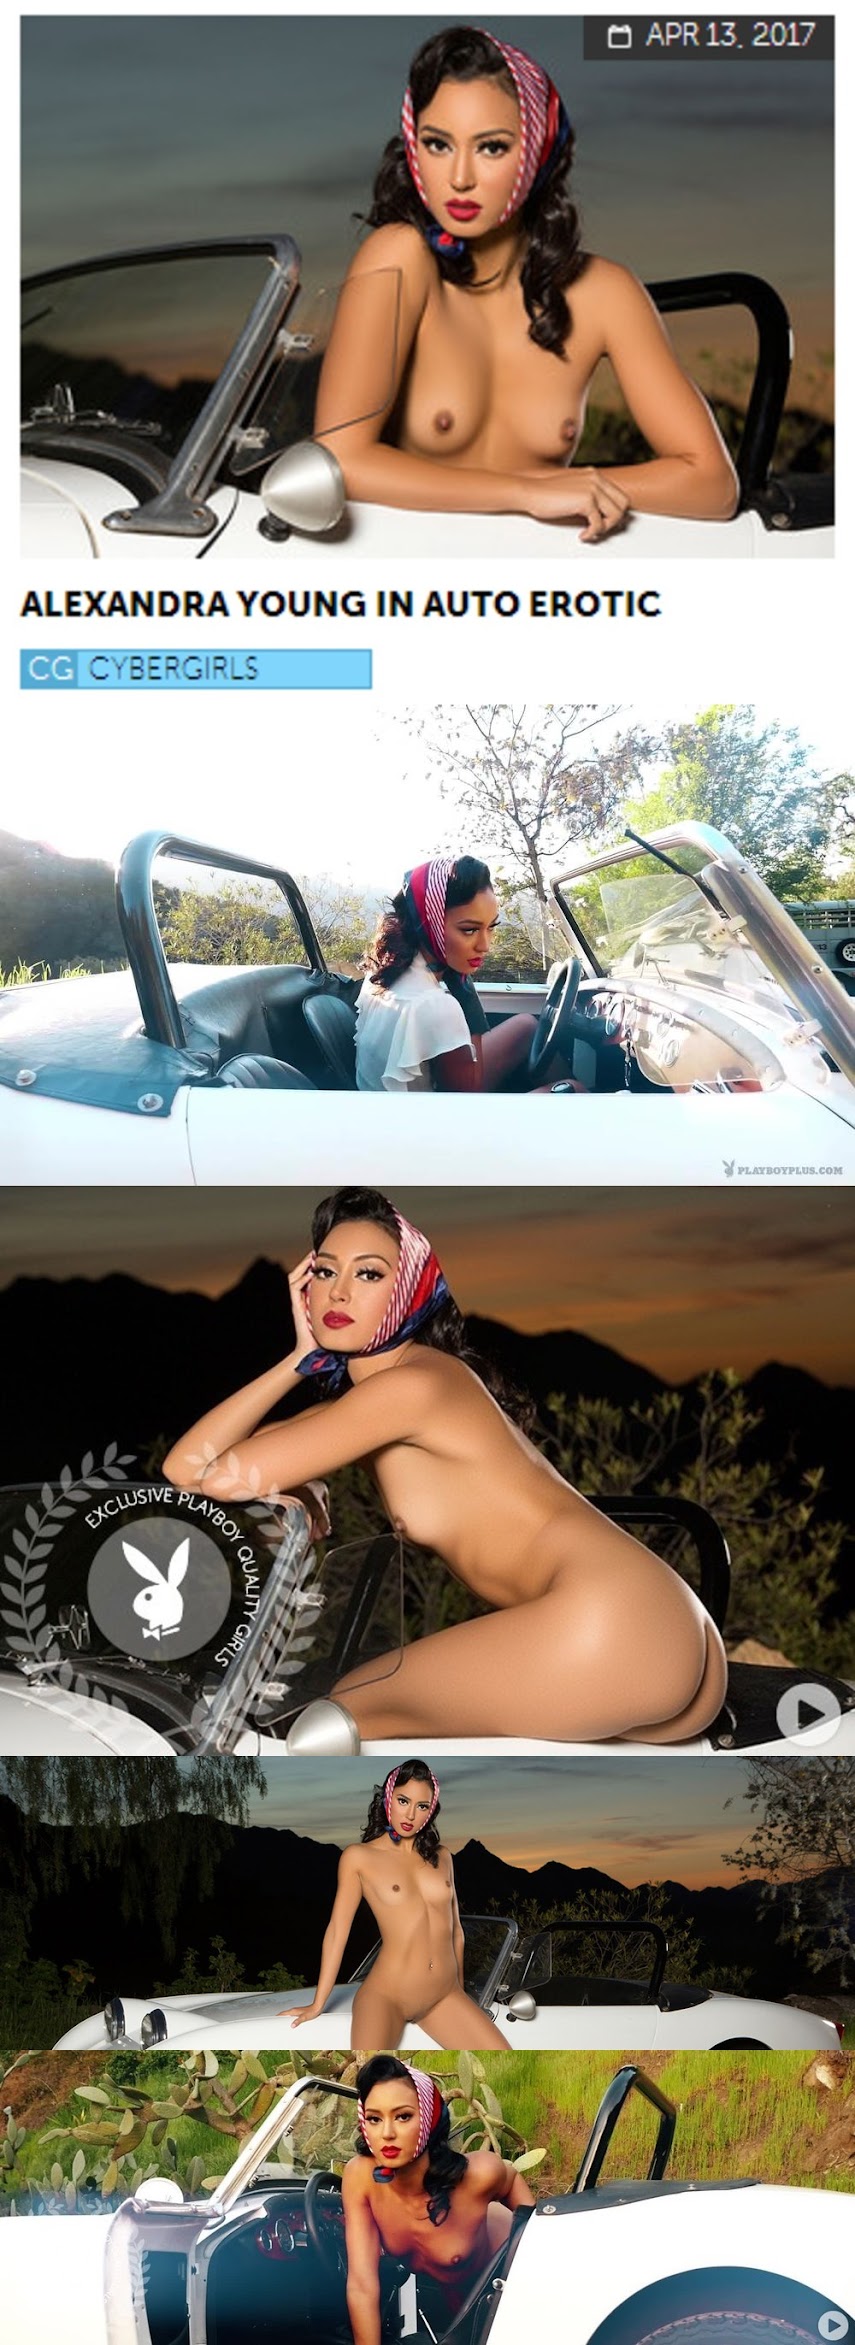 PlayboyPlus2017-04-13_Alexandra_Young_in_Auto_Erotic.rar-jk- Playboy PlayboyPlus2017-04-13 Alexandra Young in Auto Erotic